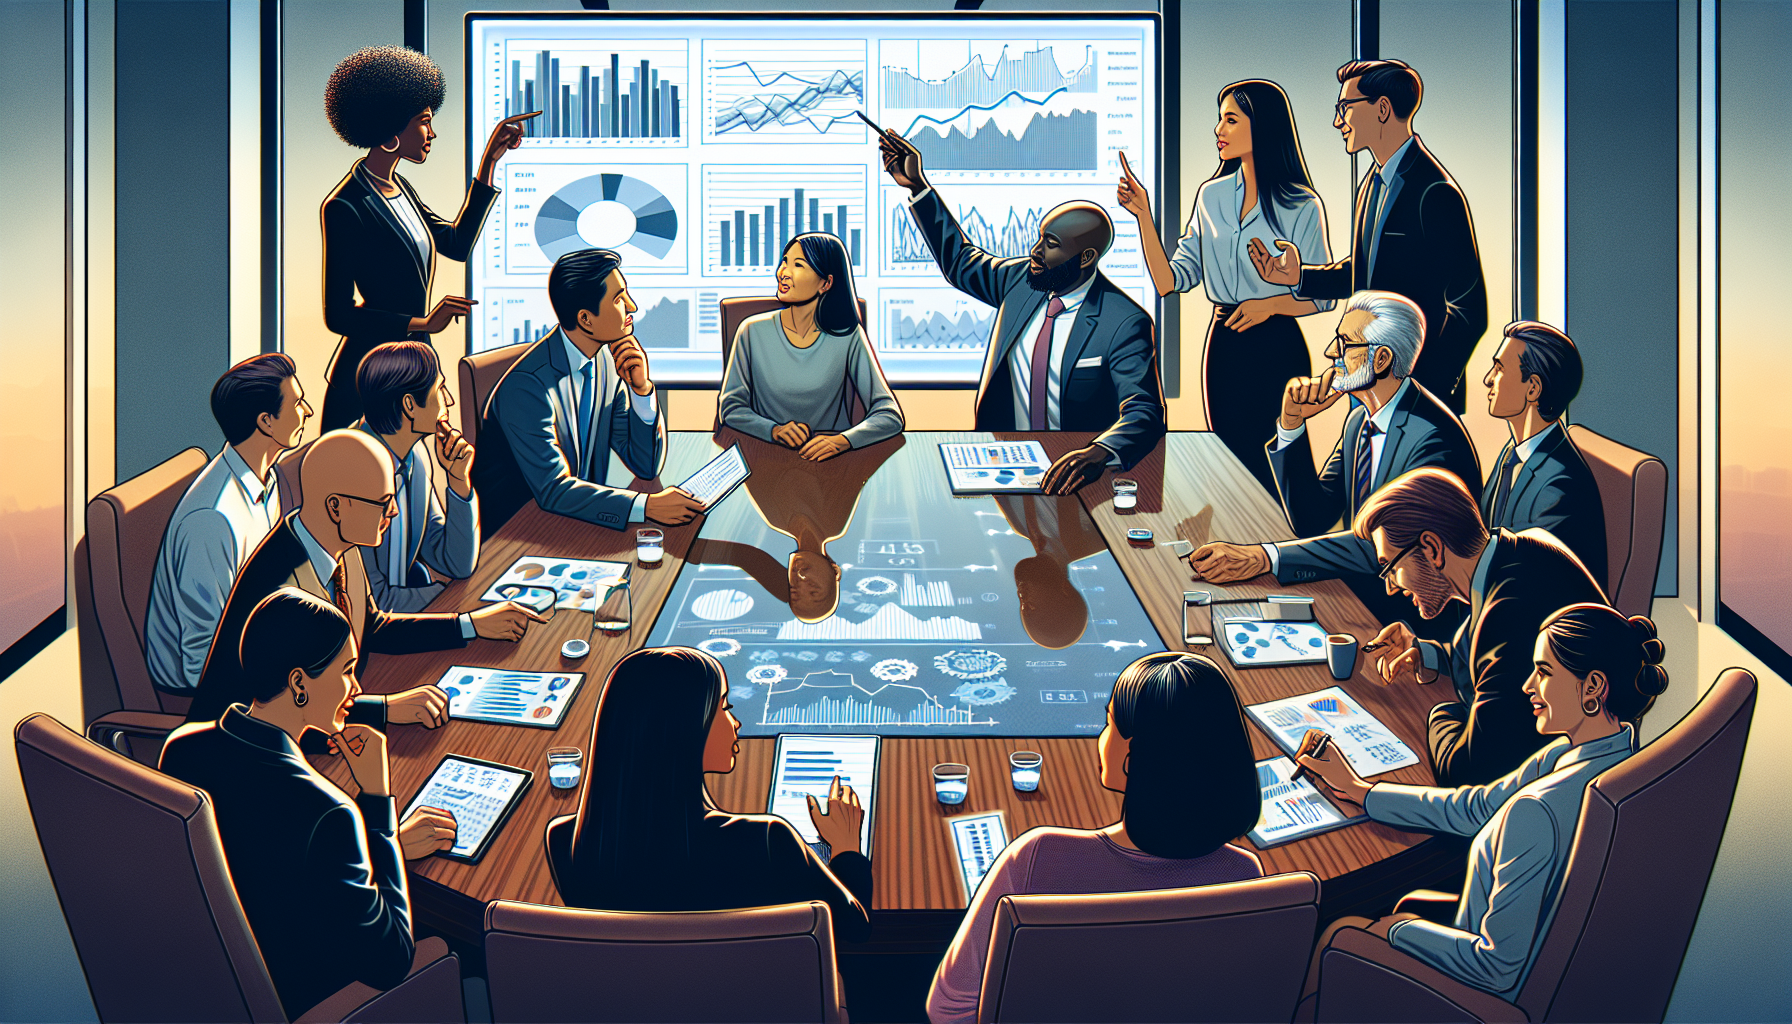 Illustration of a strategic planning meeting